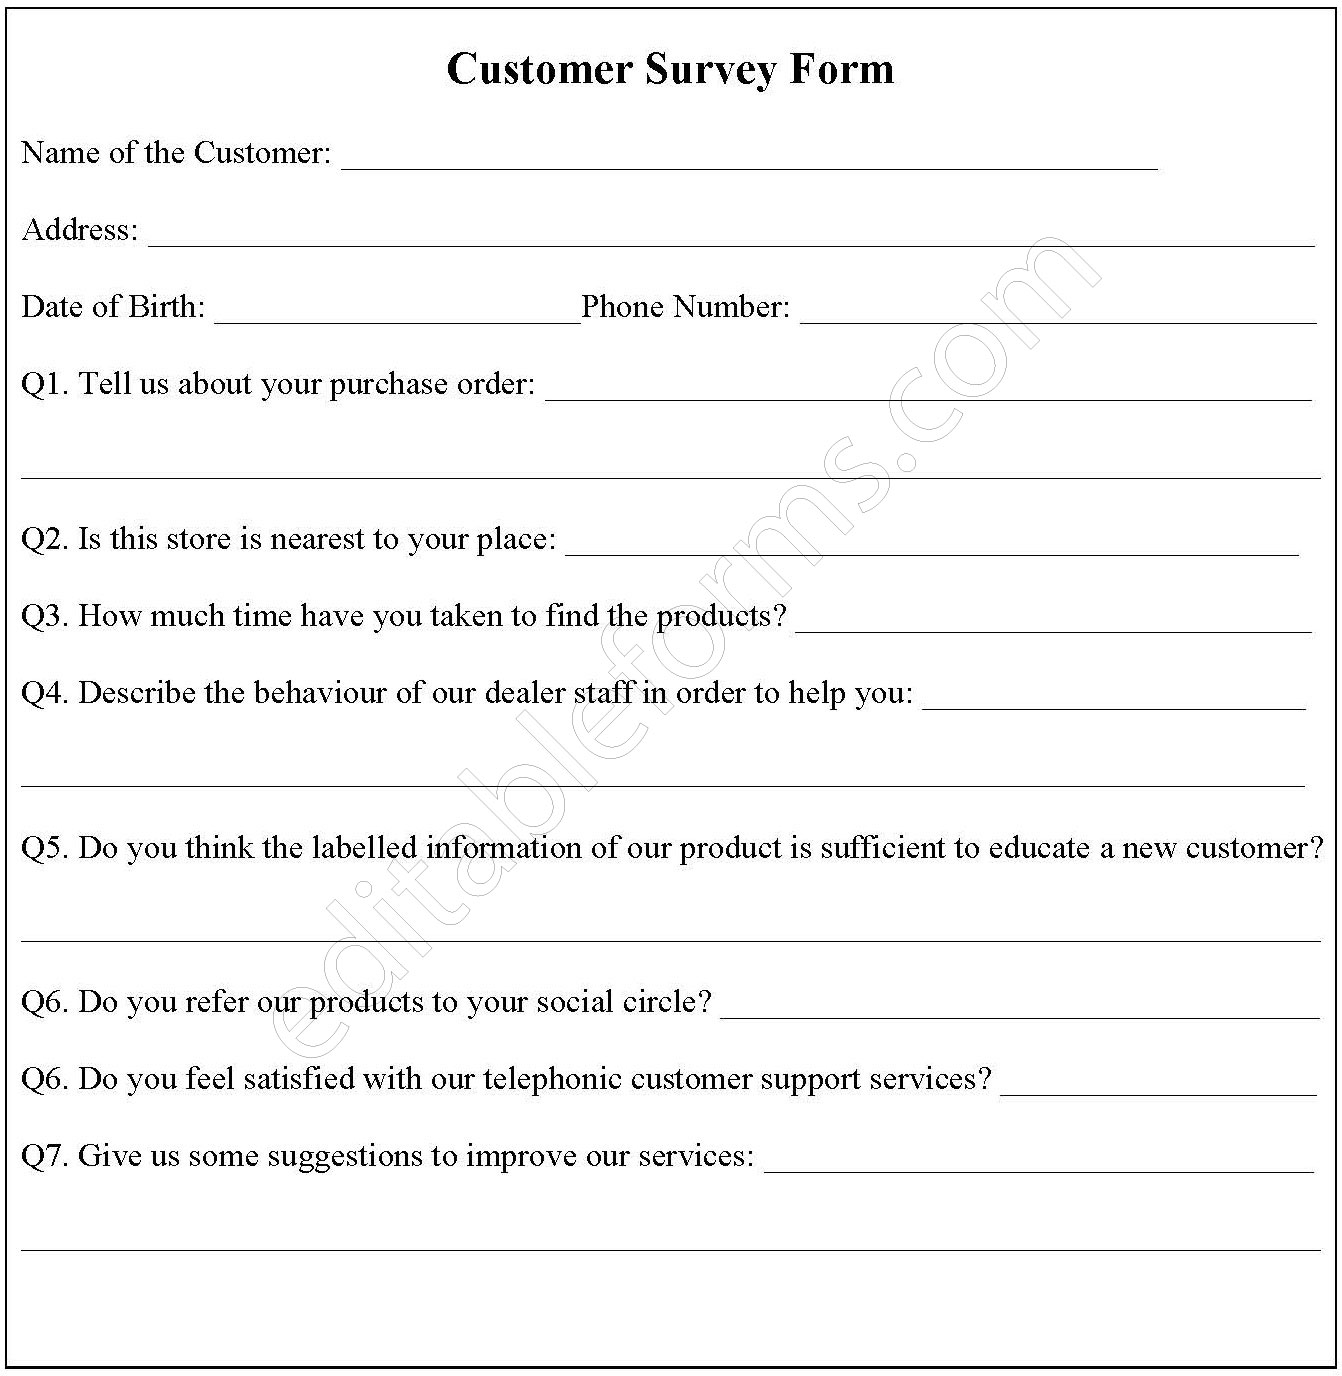 Customer Survey Form